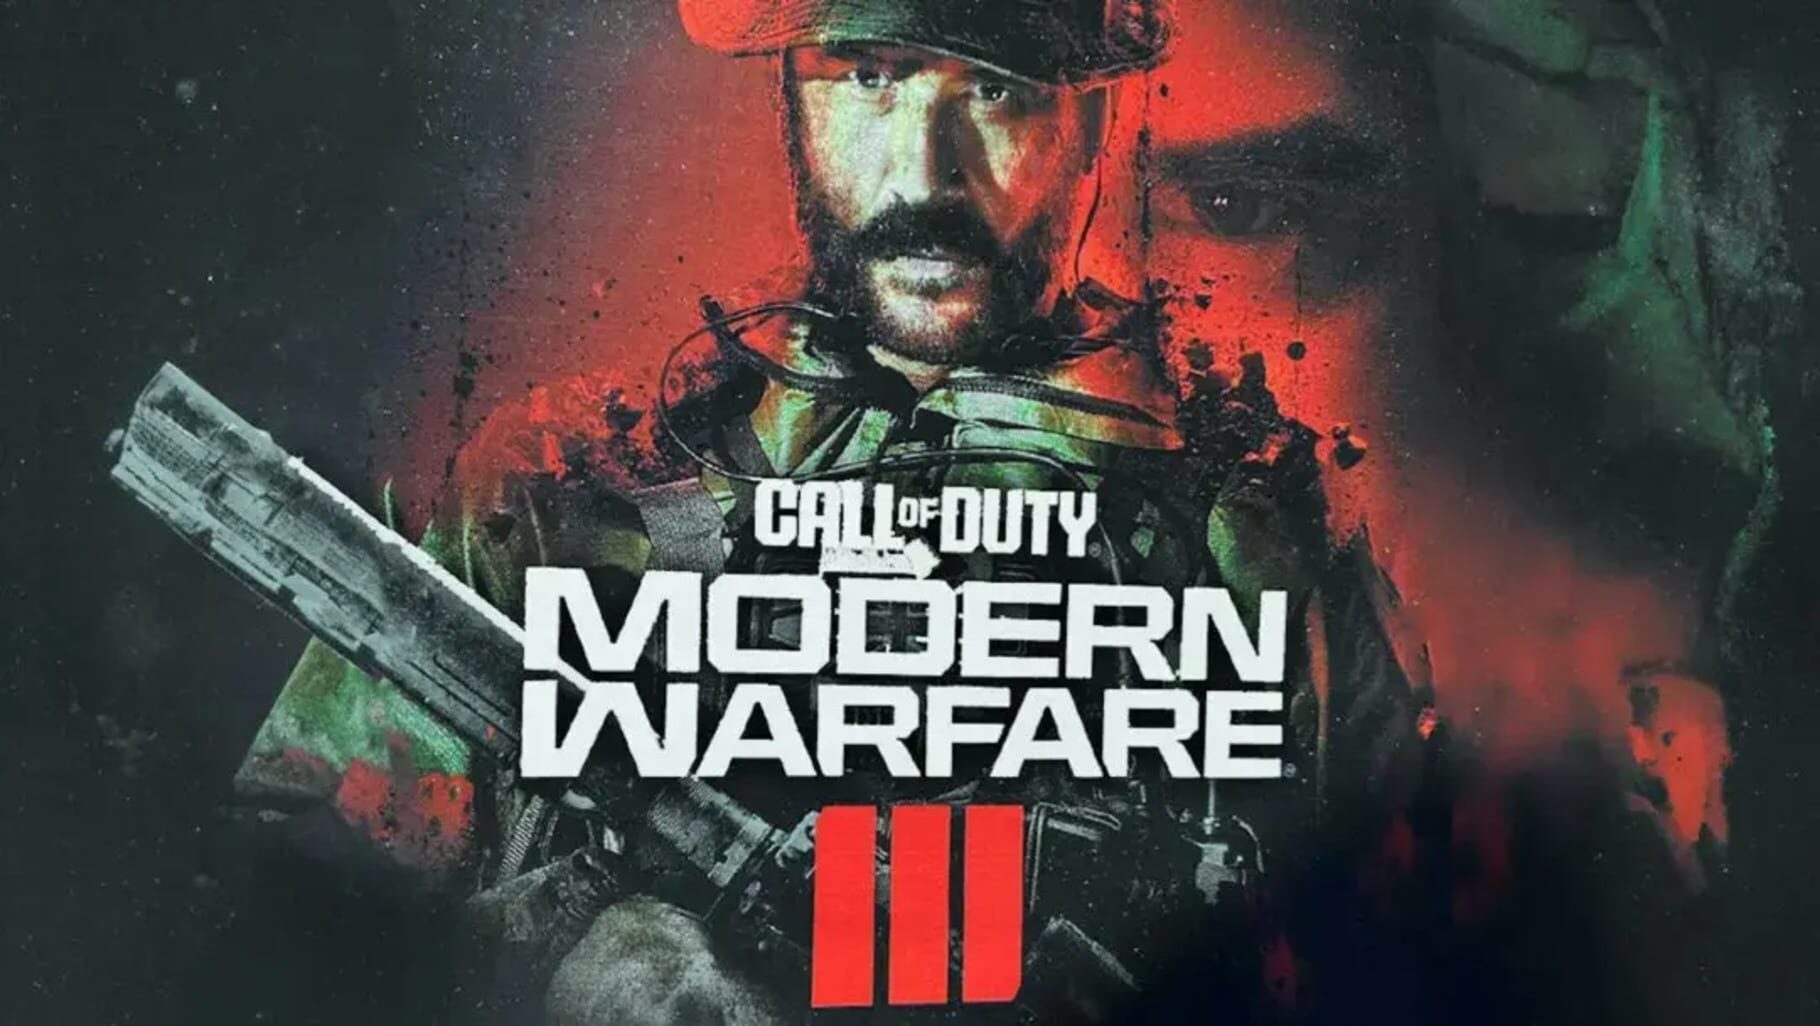 Artwork for Call of Duty: Modern Warfare III